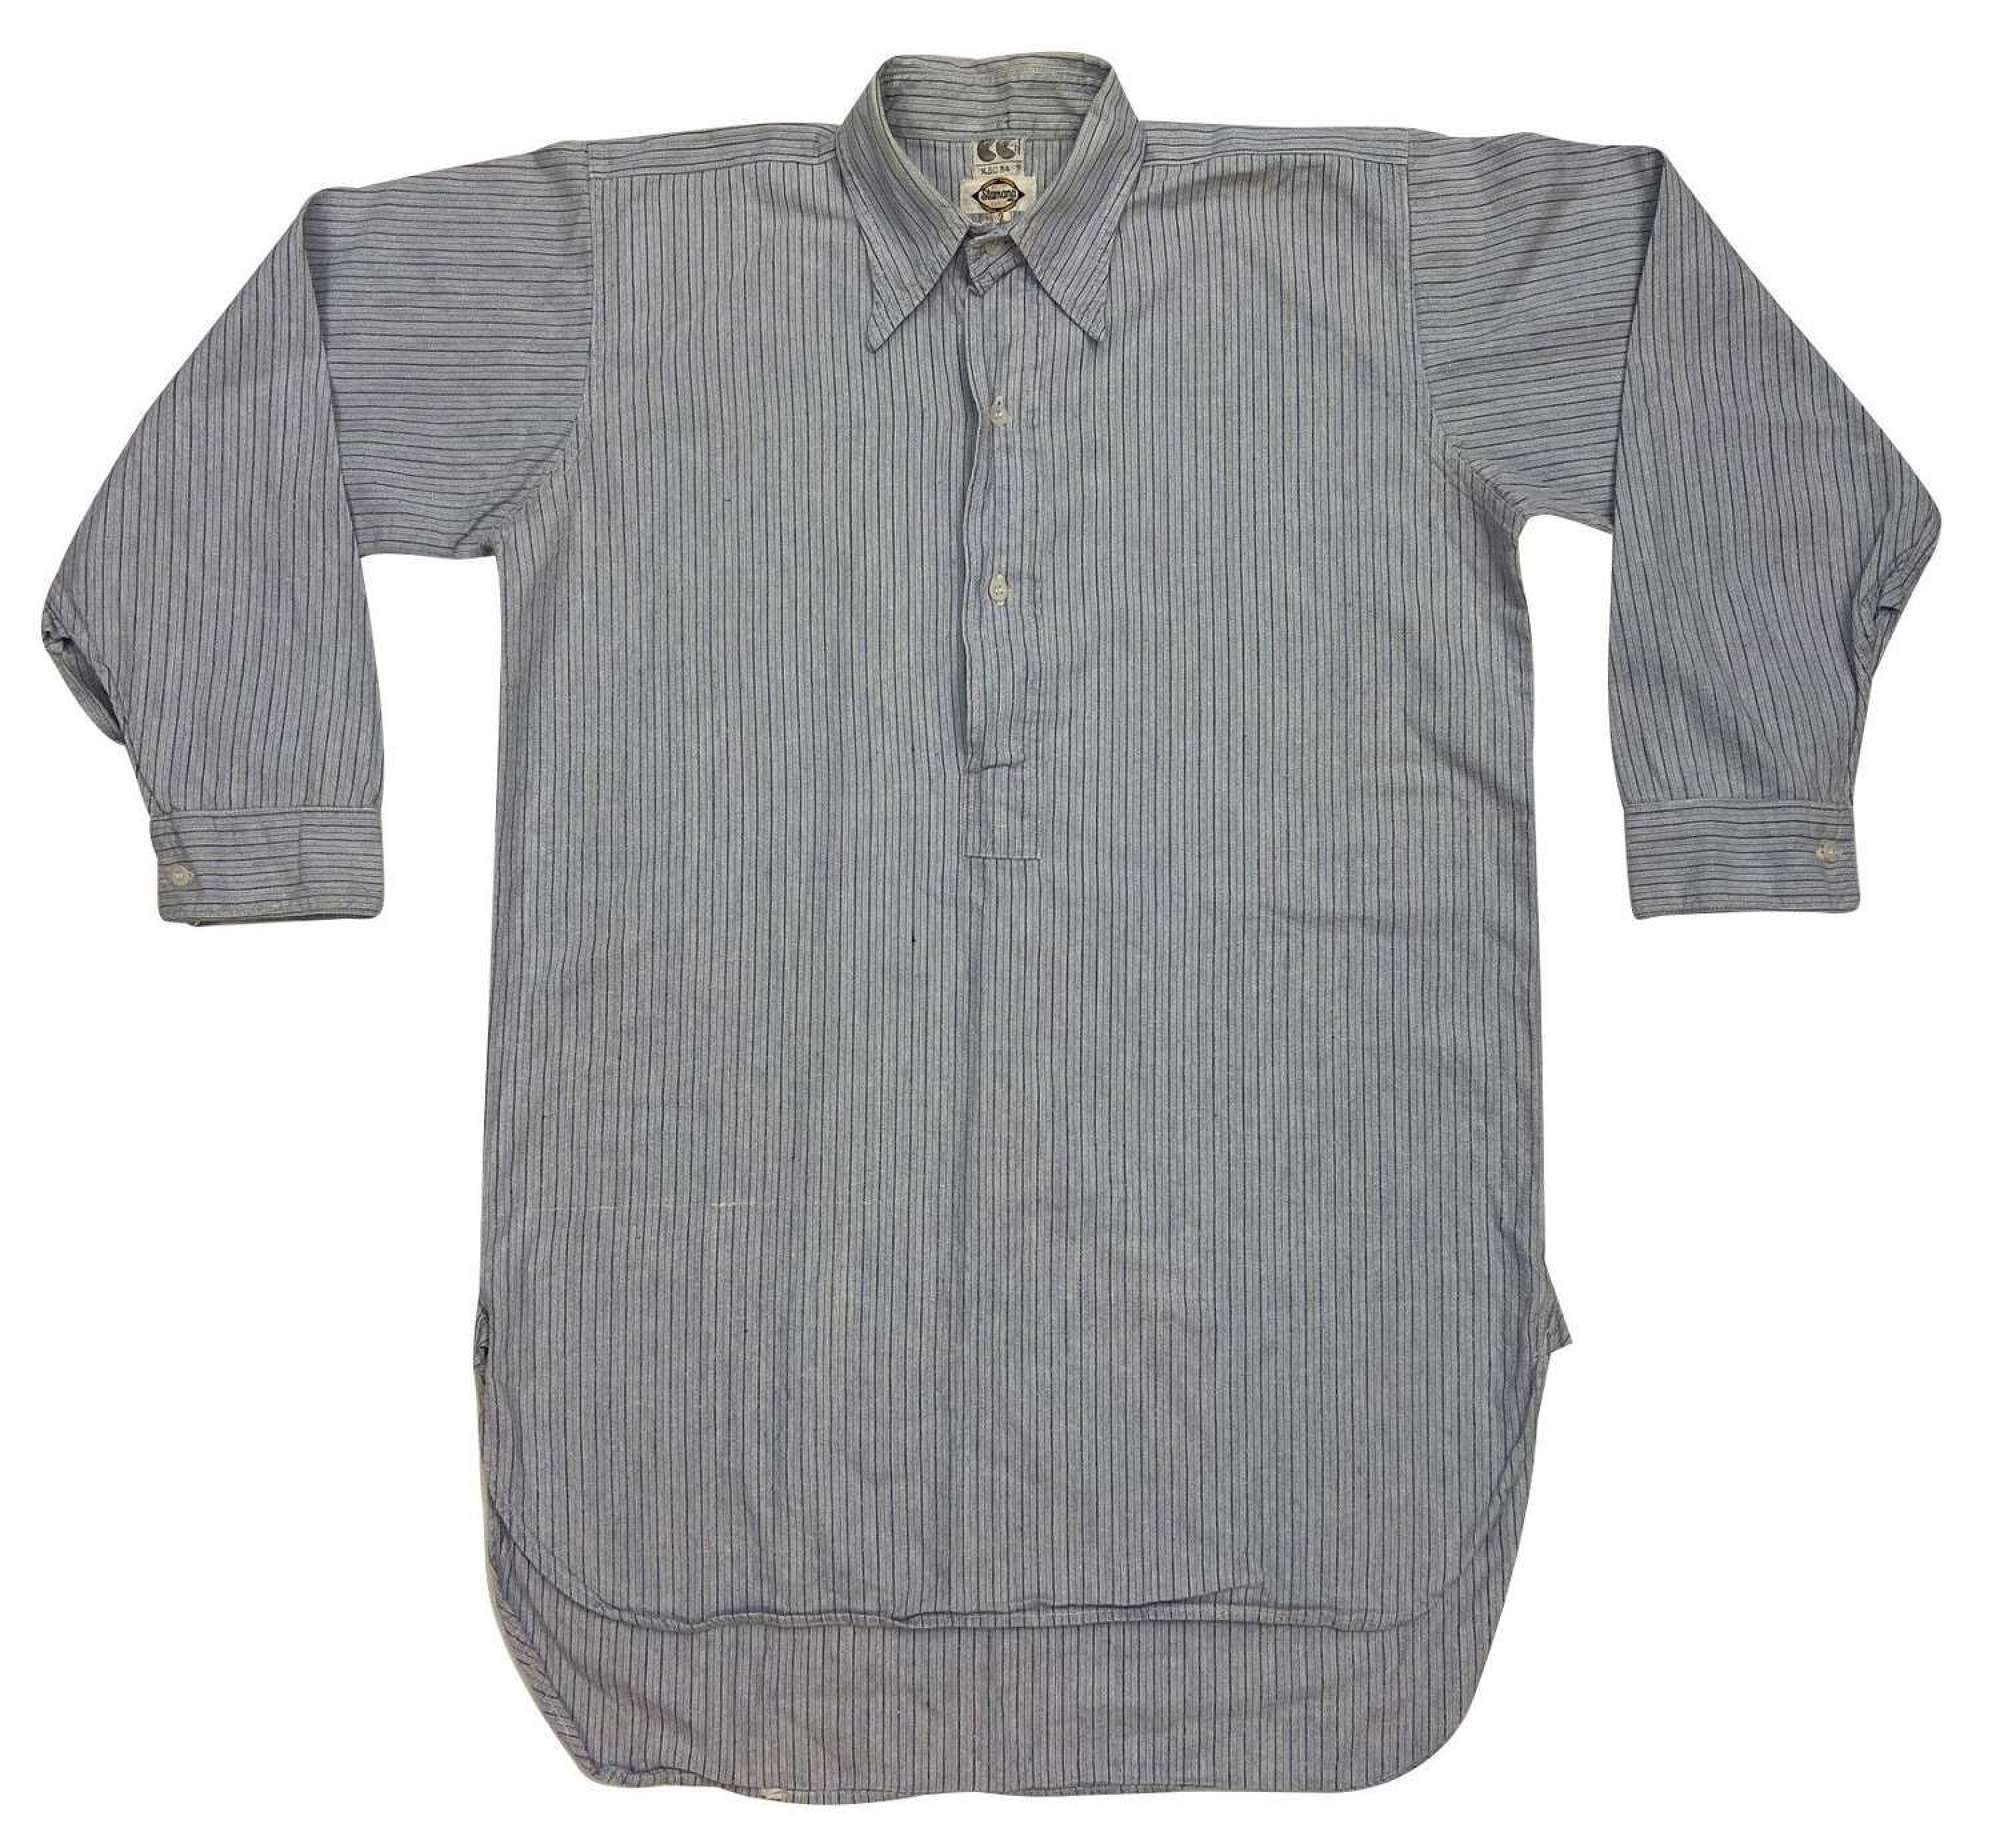 Original 1940s CC41 Collared Shirt by 'Stamana'